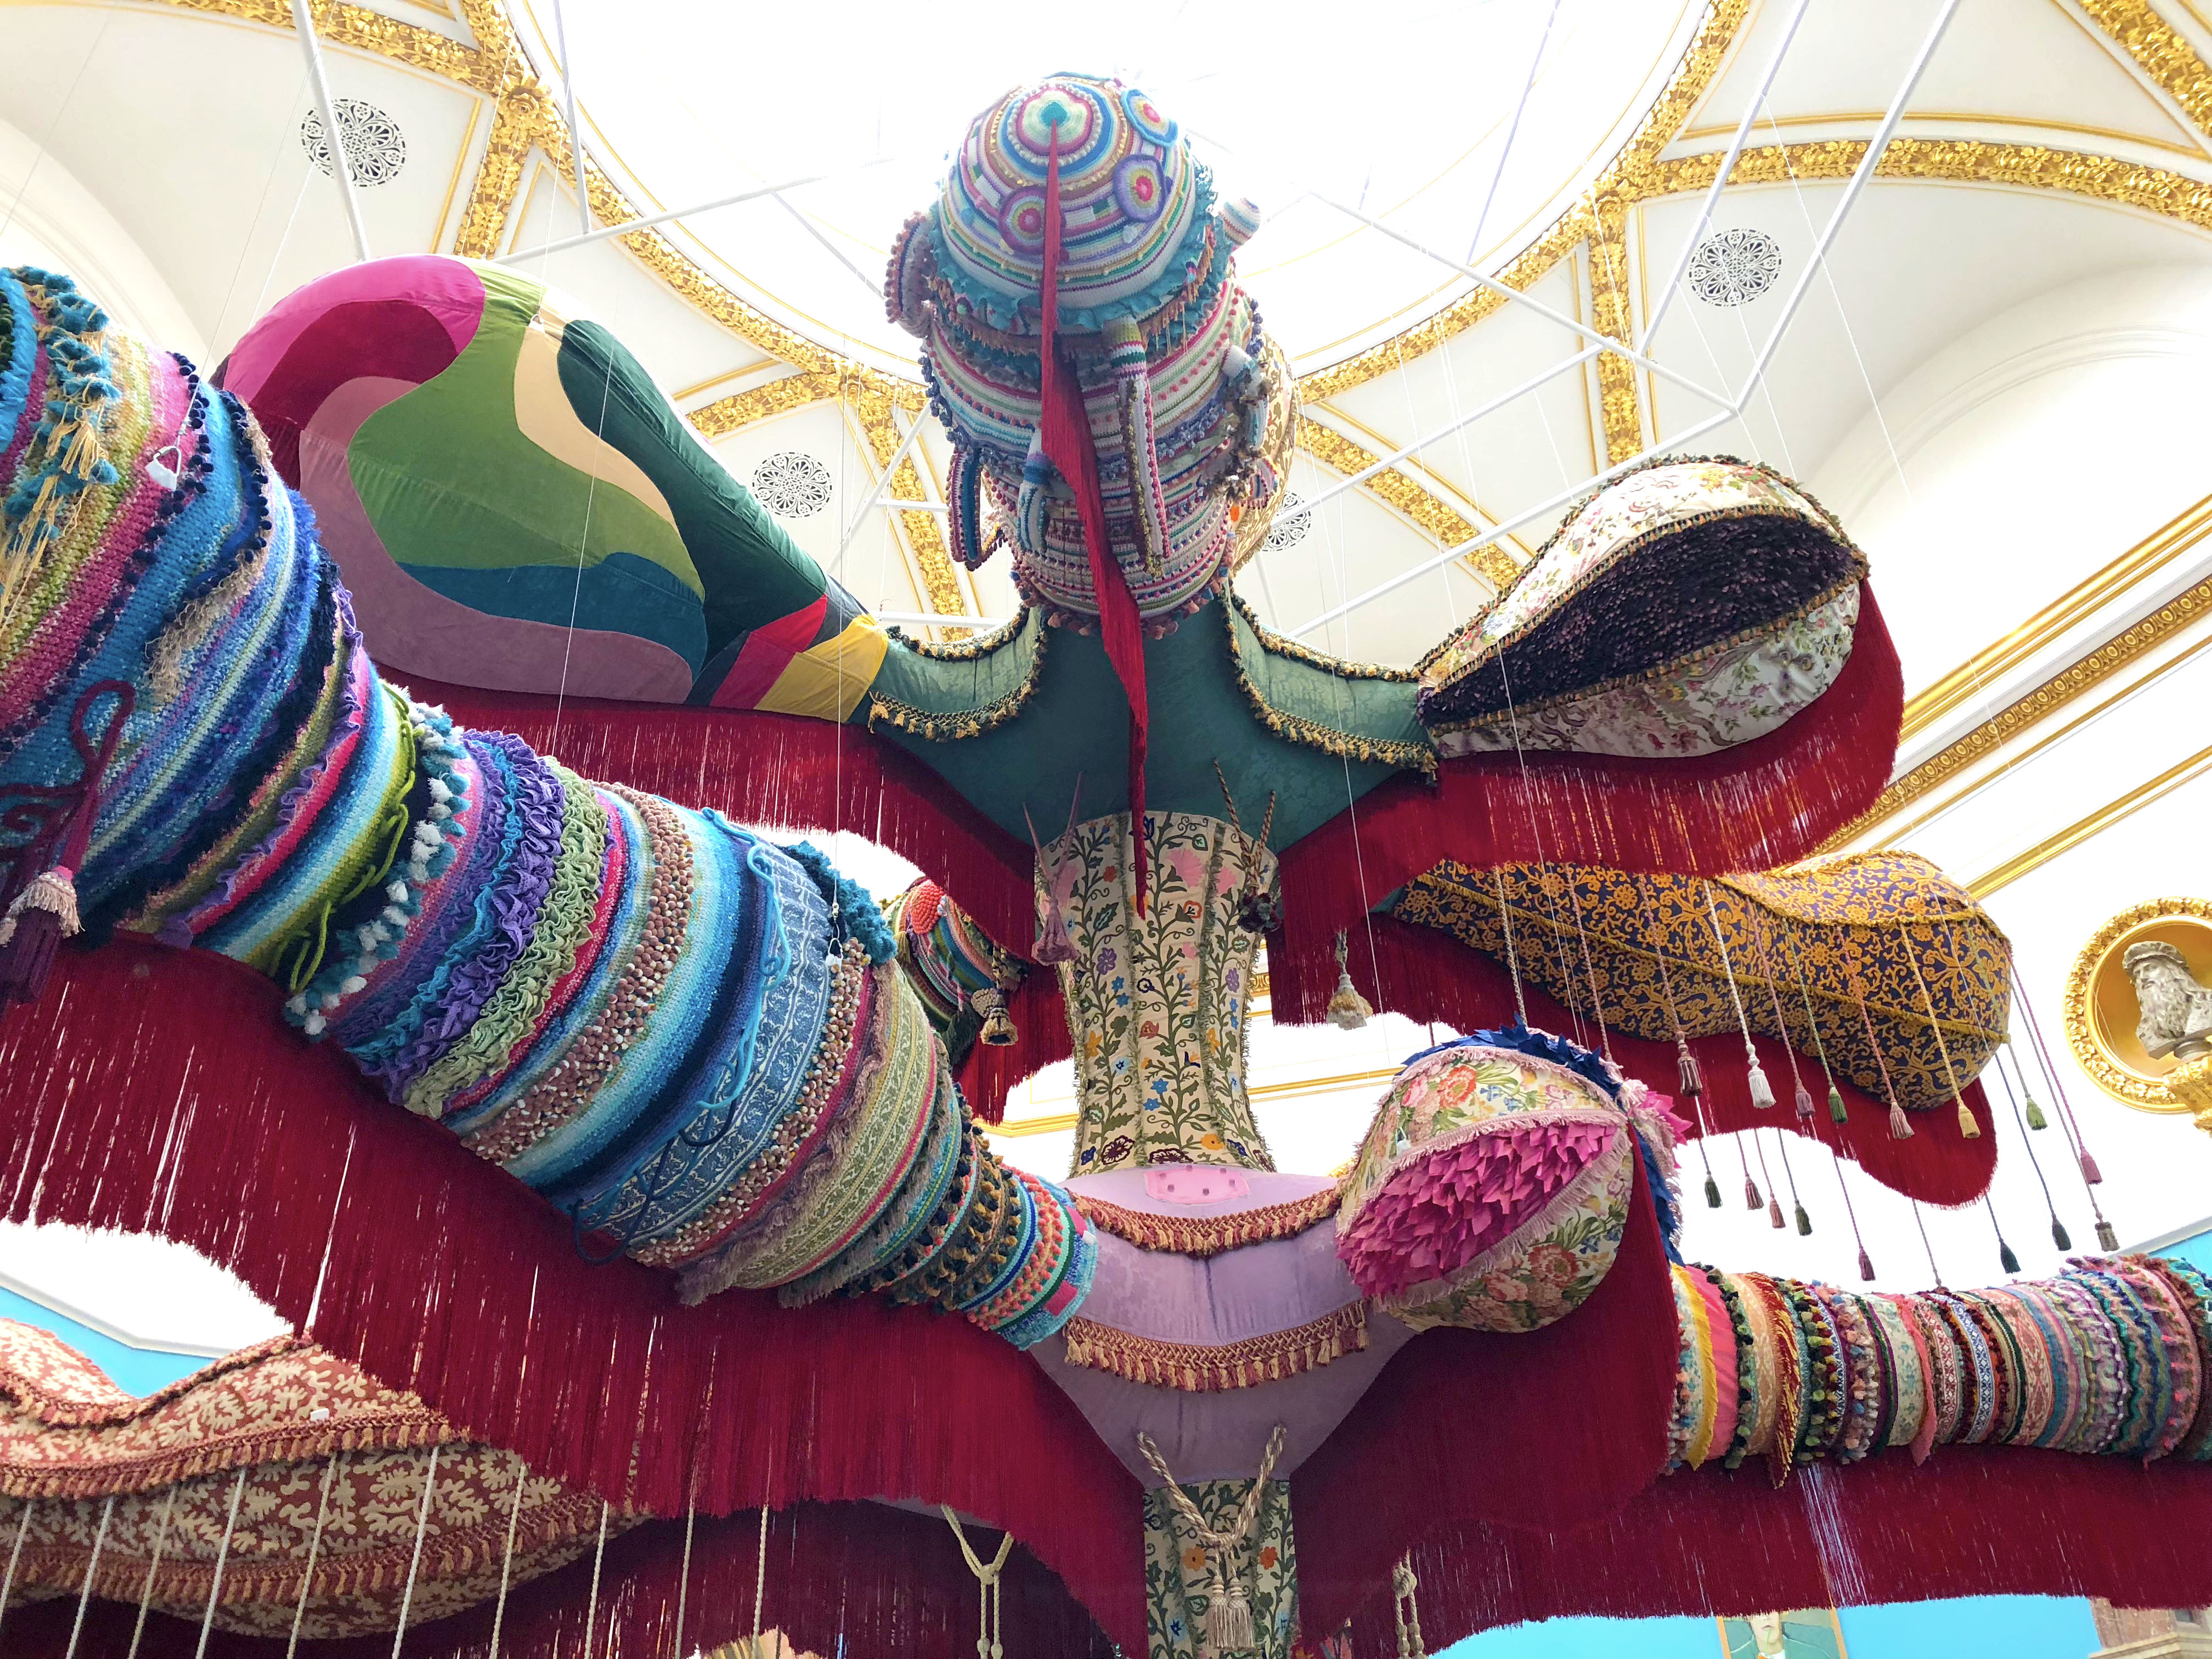 Crochet Hanging Artwork by Joana Vasconcelos at the Royal Academy Summer Exhibition 2018